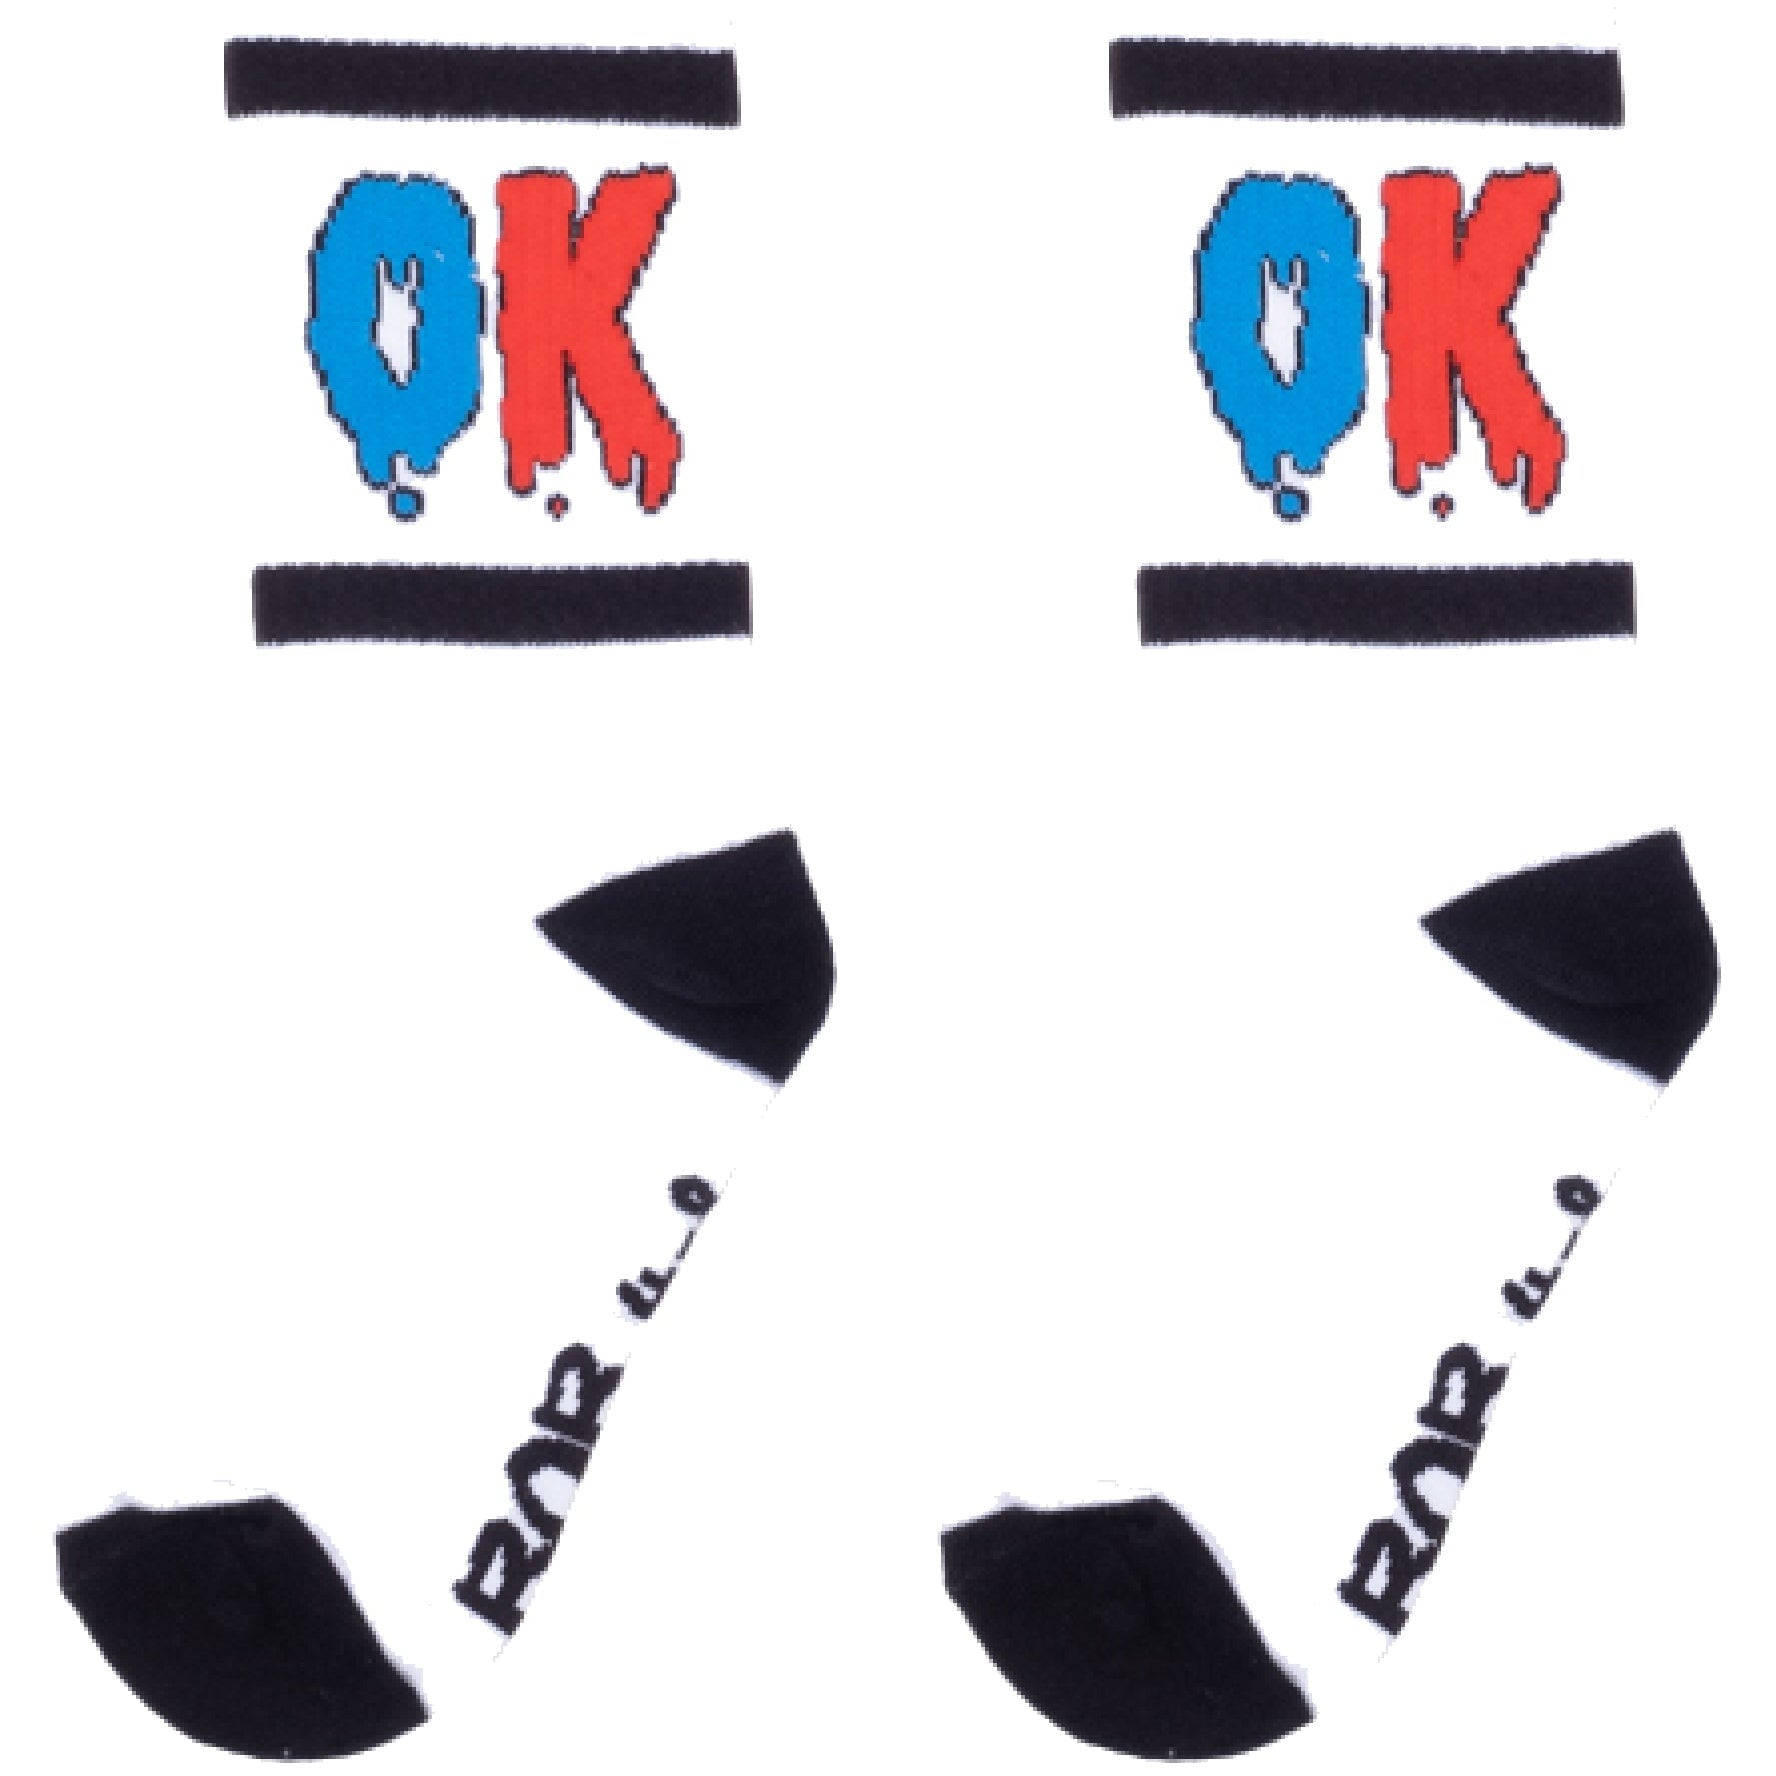 OK Gradient Skate Socks